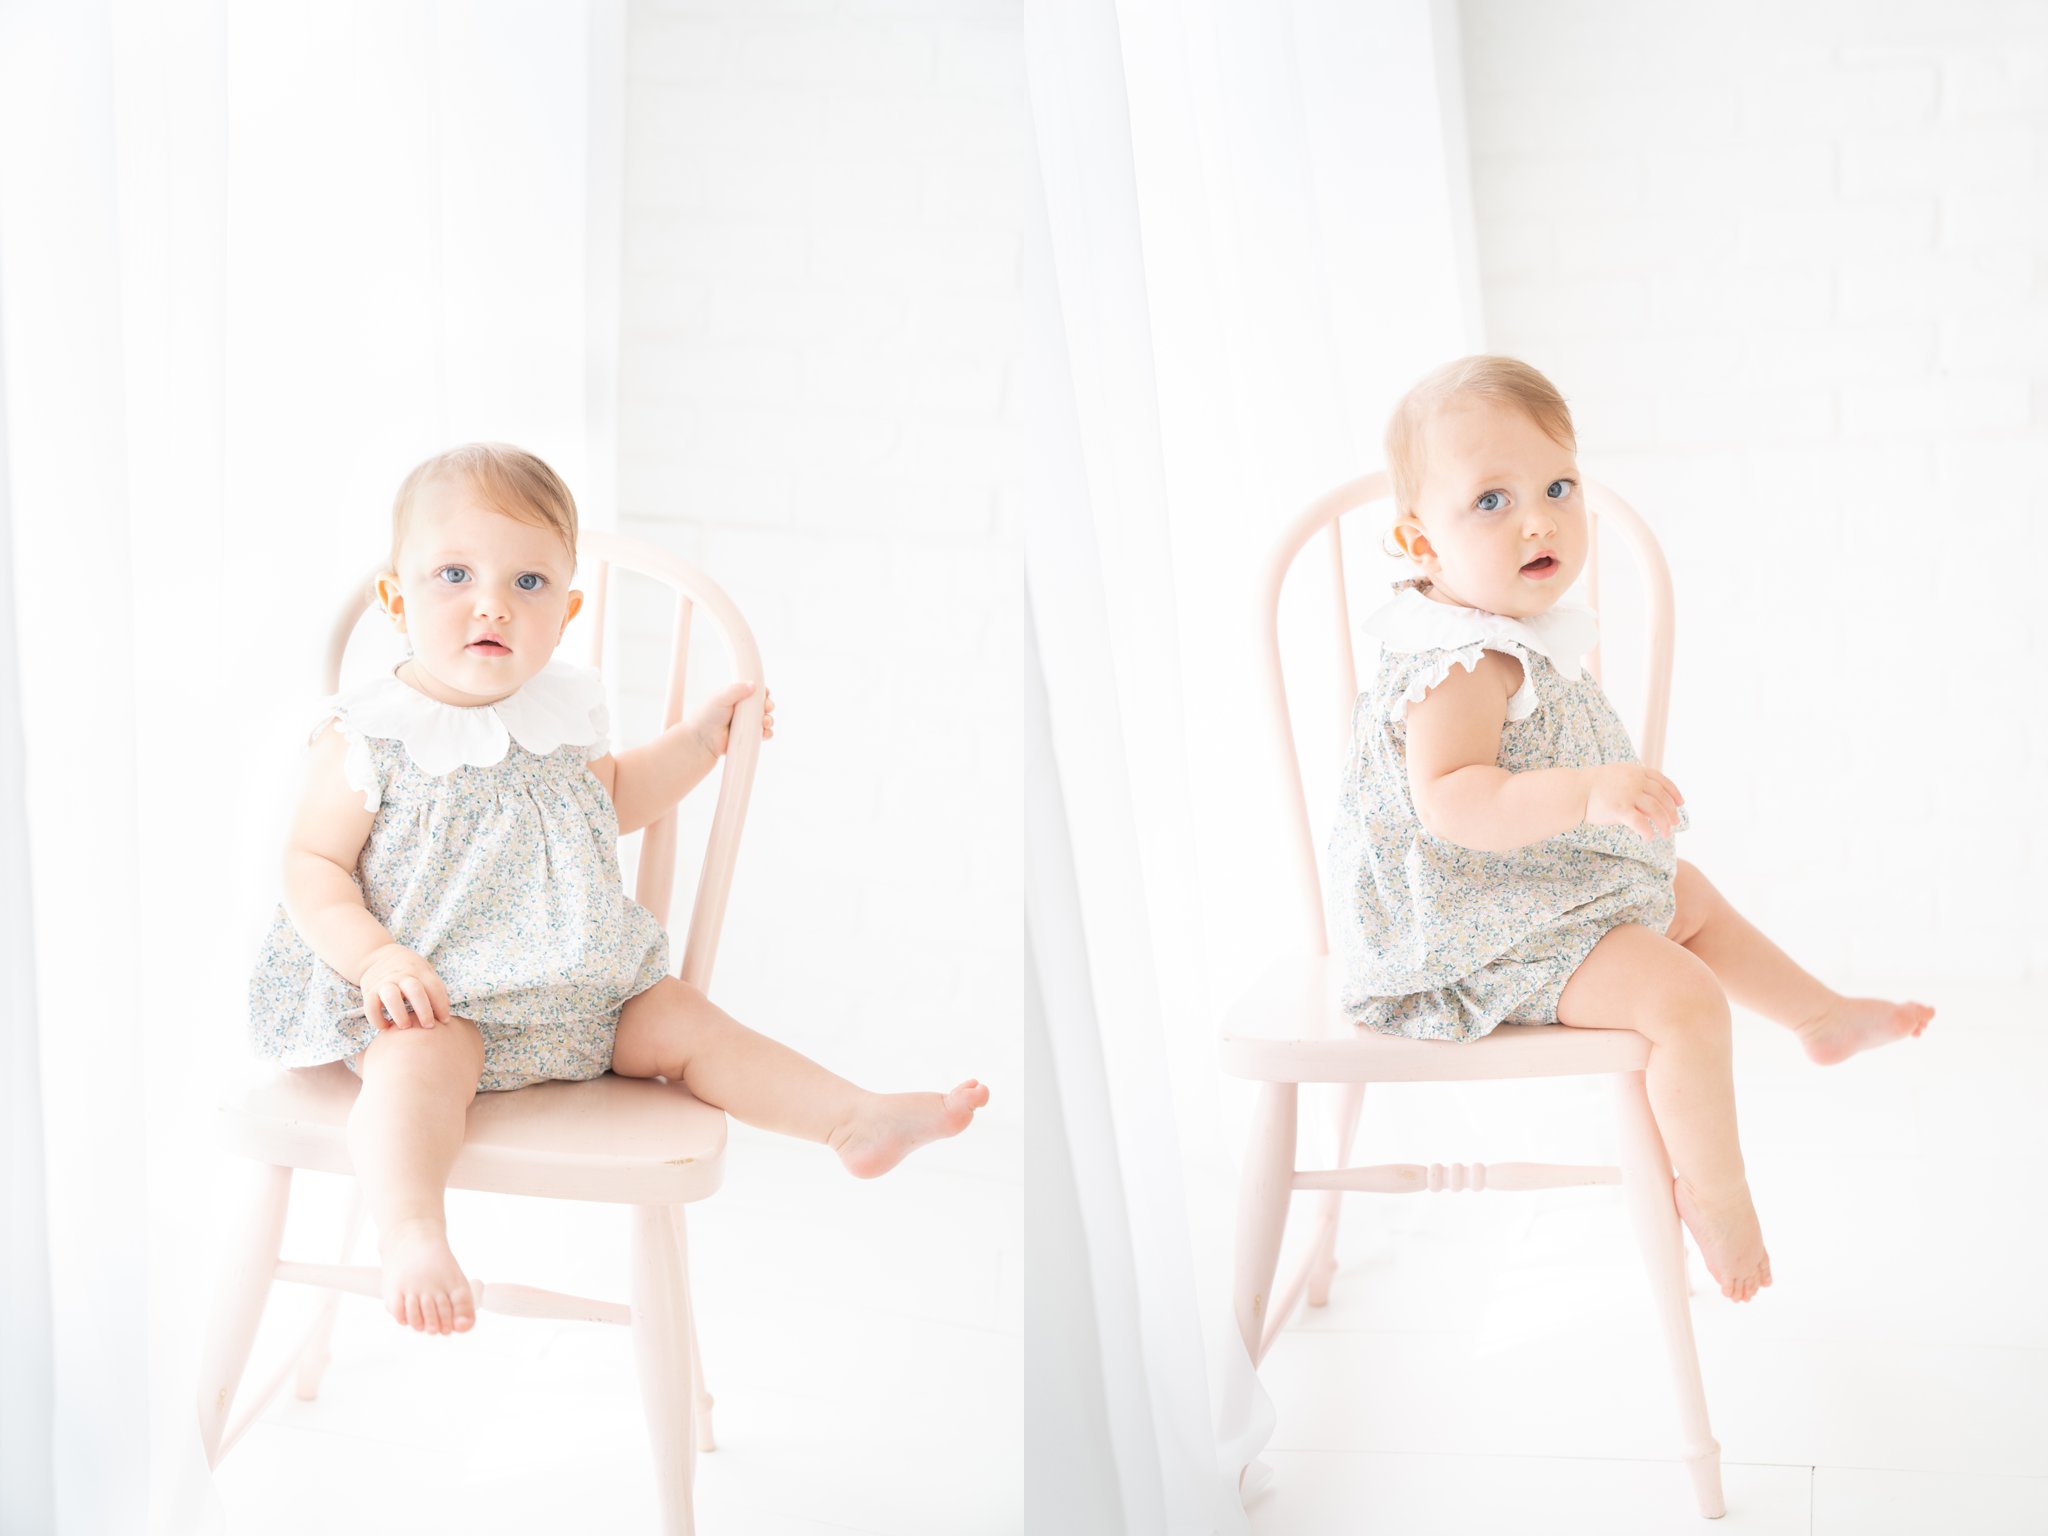 Baby girl's Birthday photography shoot in Jupiter Fl studio